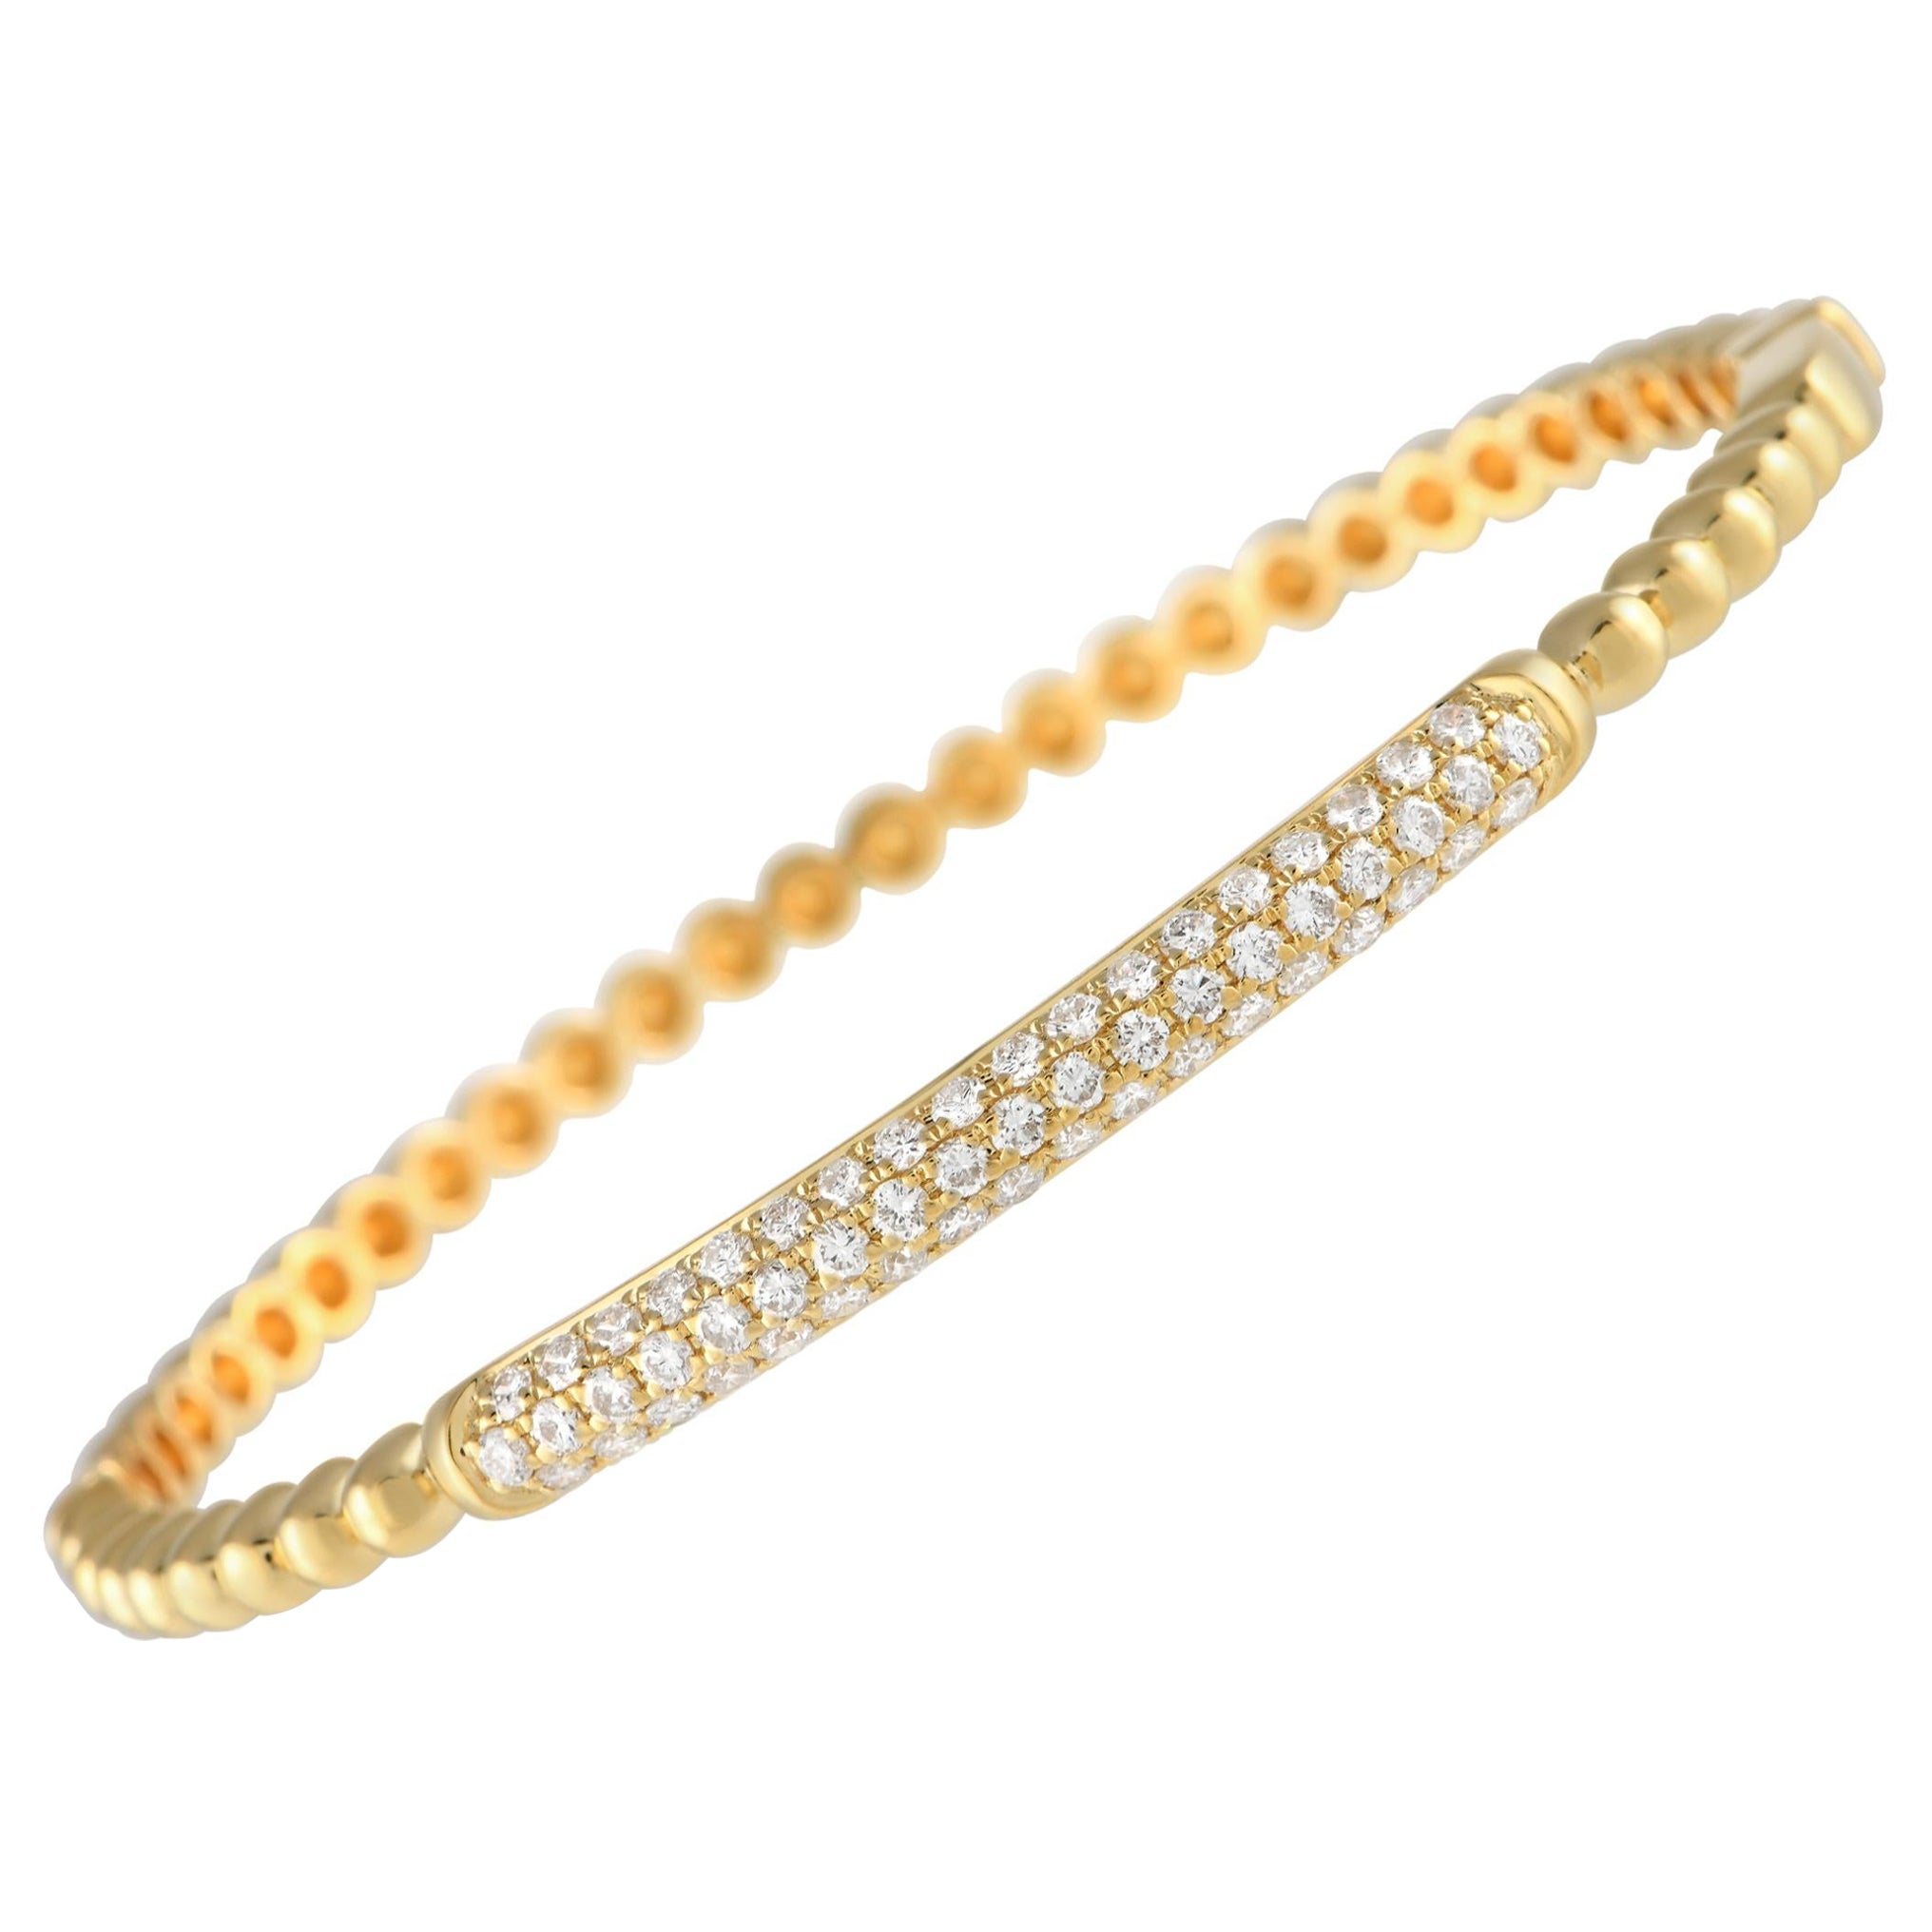 LB Exclusive 18Karat Yellow Gold 1.06Carat Diamond Bracelet